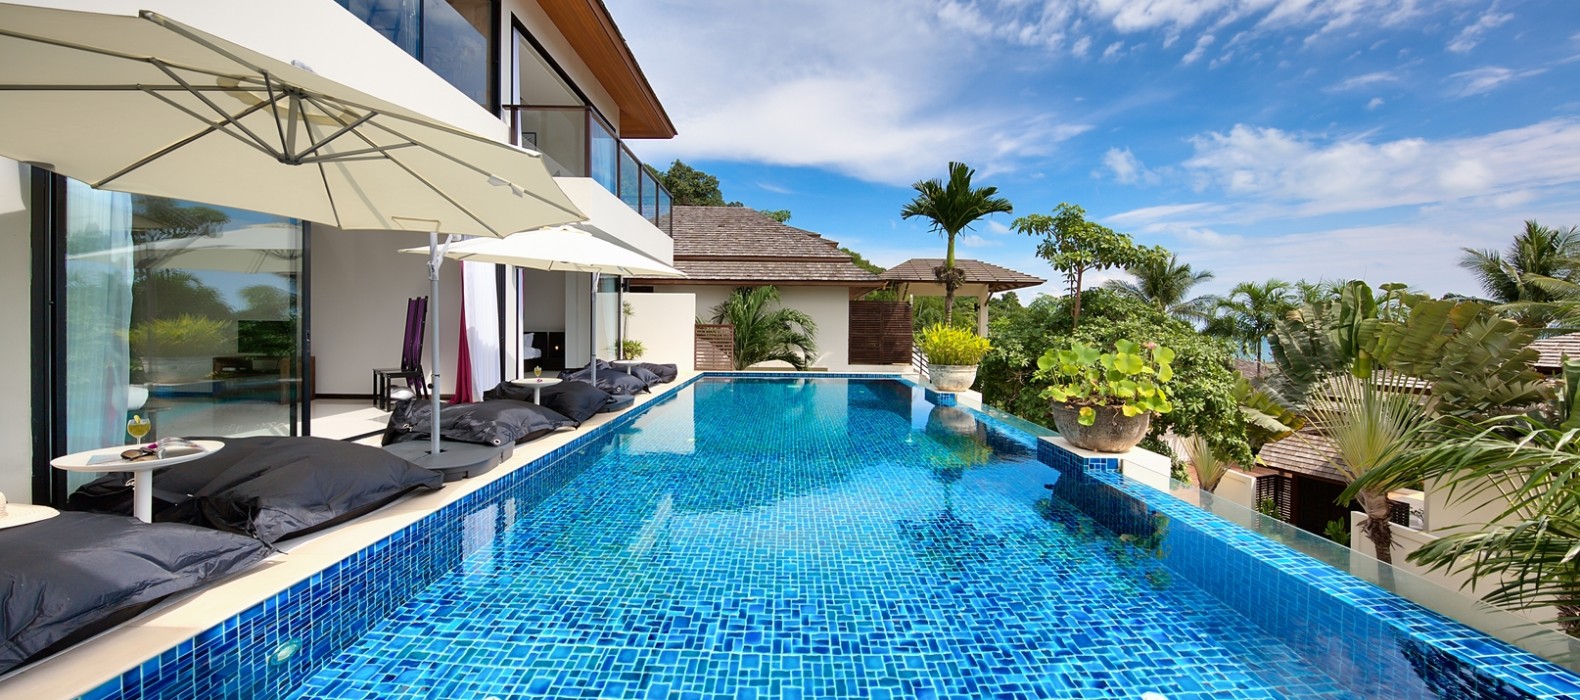 Exterior pool of Villa Calm Samui in Koh Samui